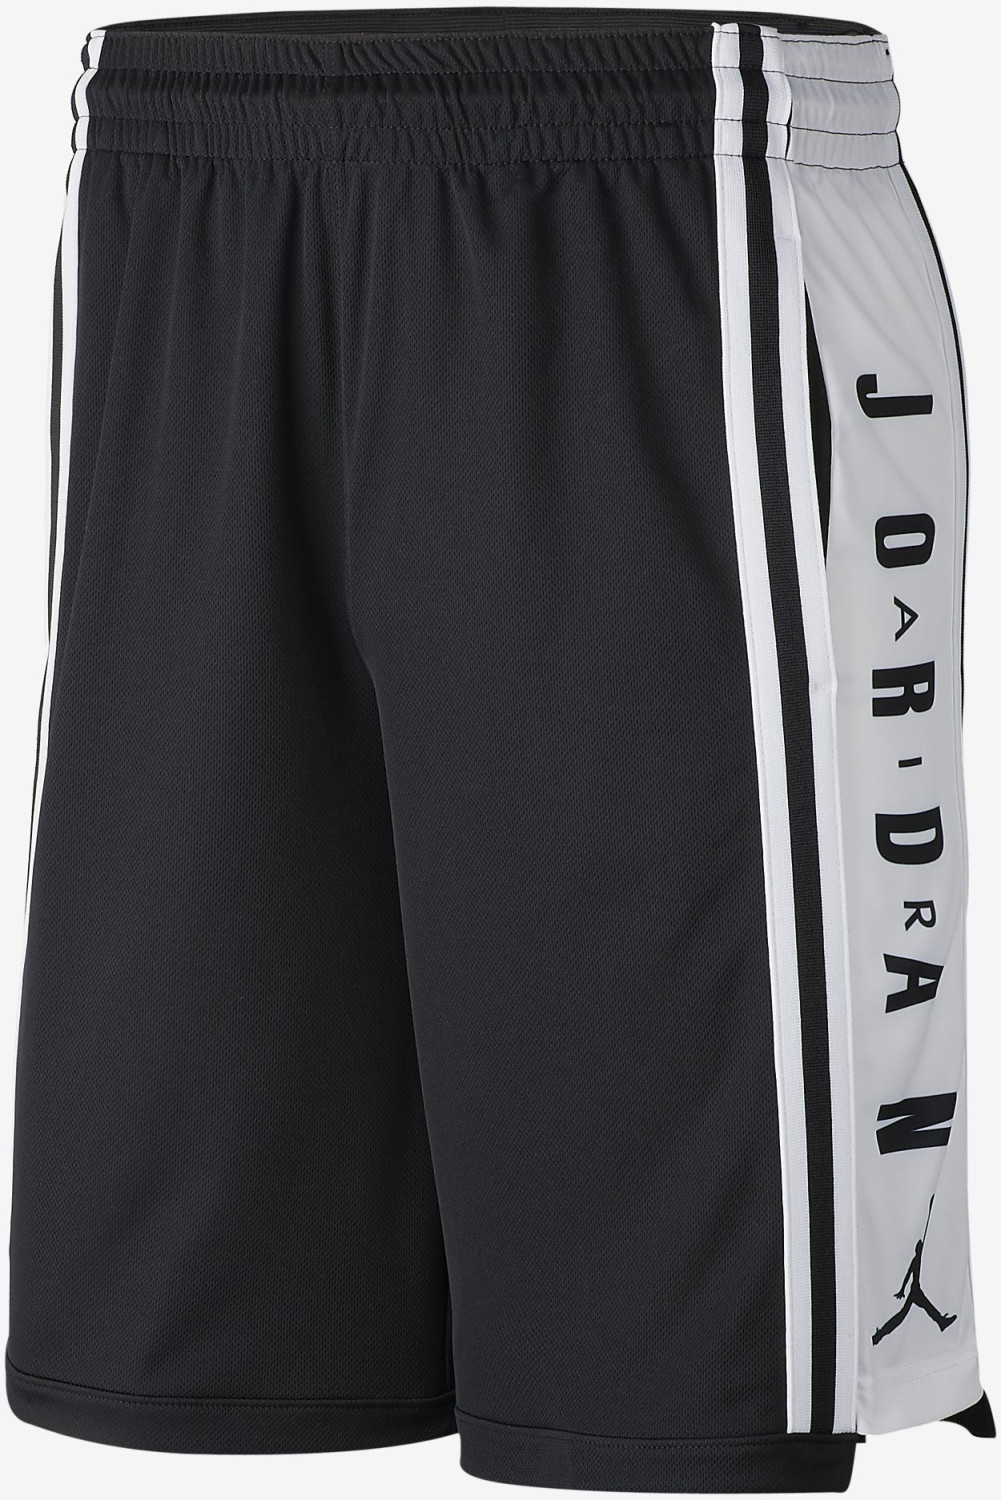 Nike Men's Basketball Shorts Jordan HBR black/white